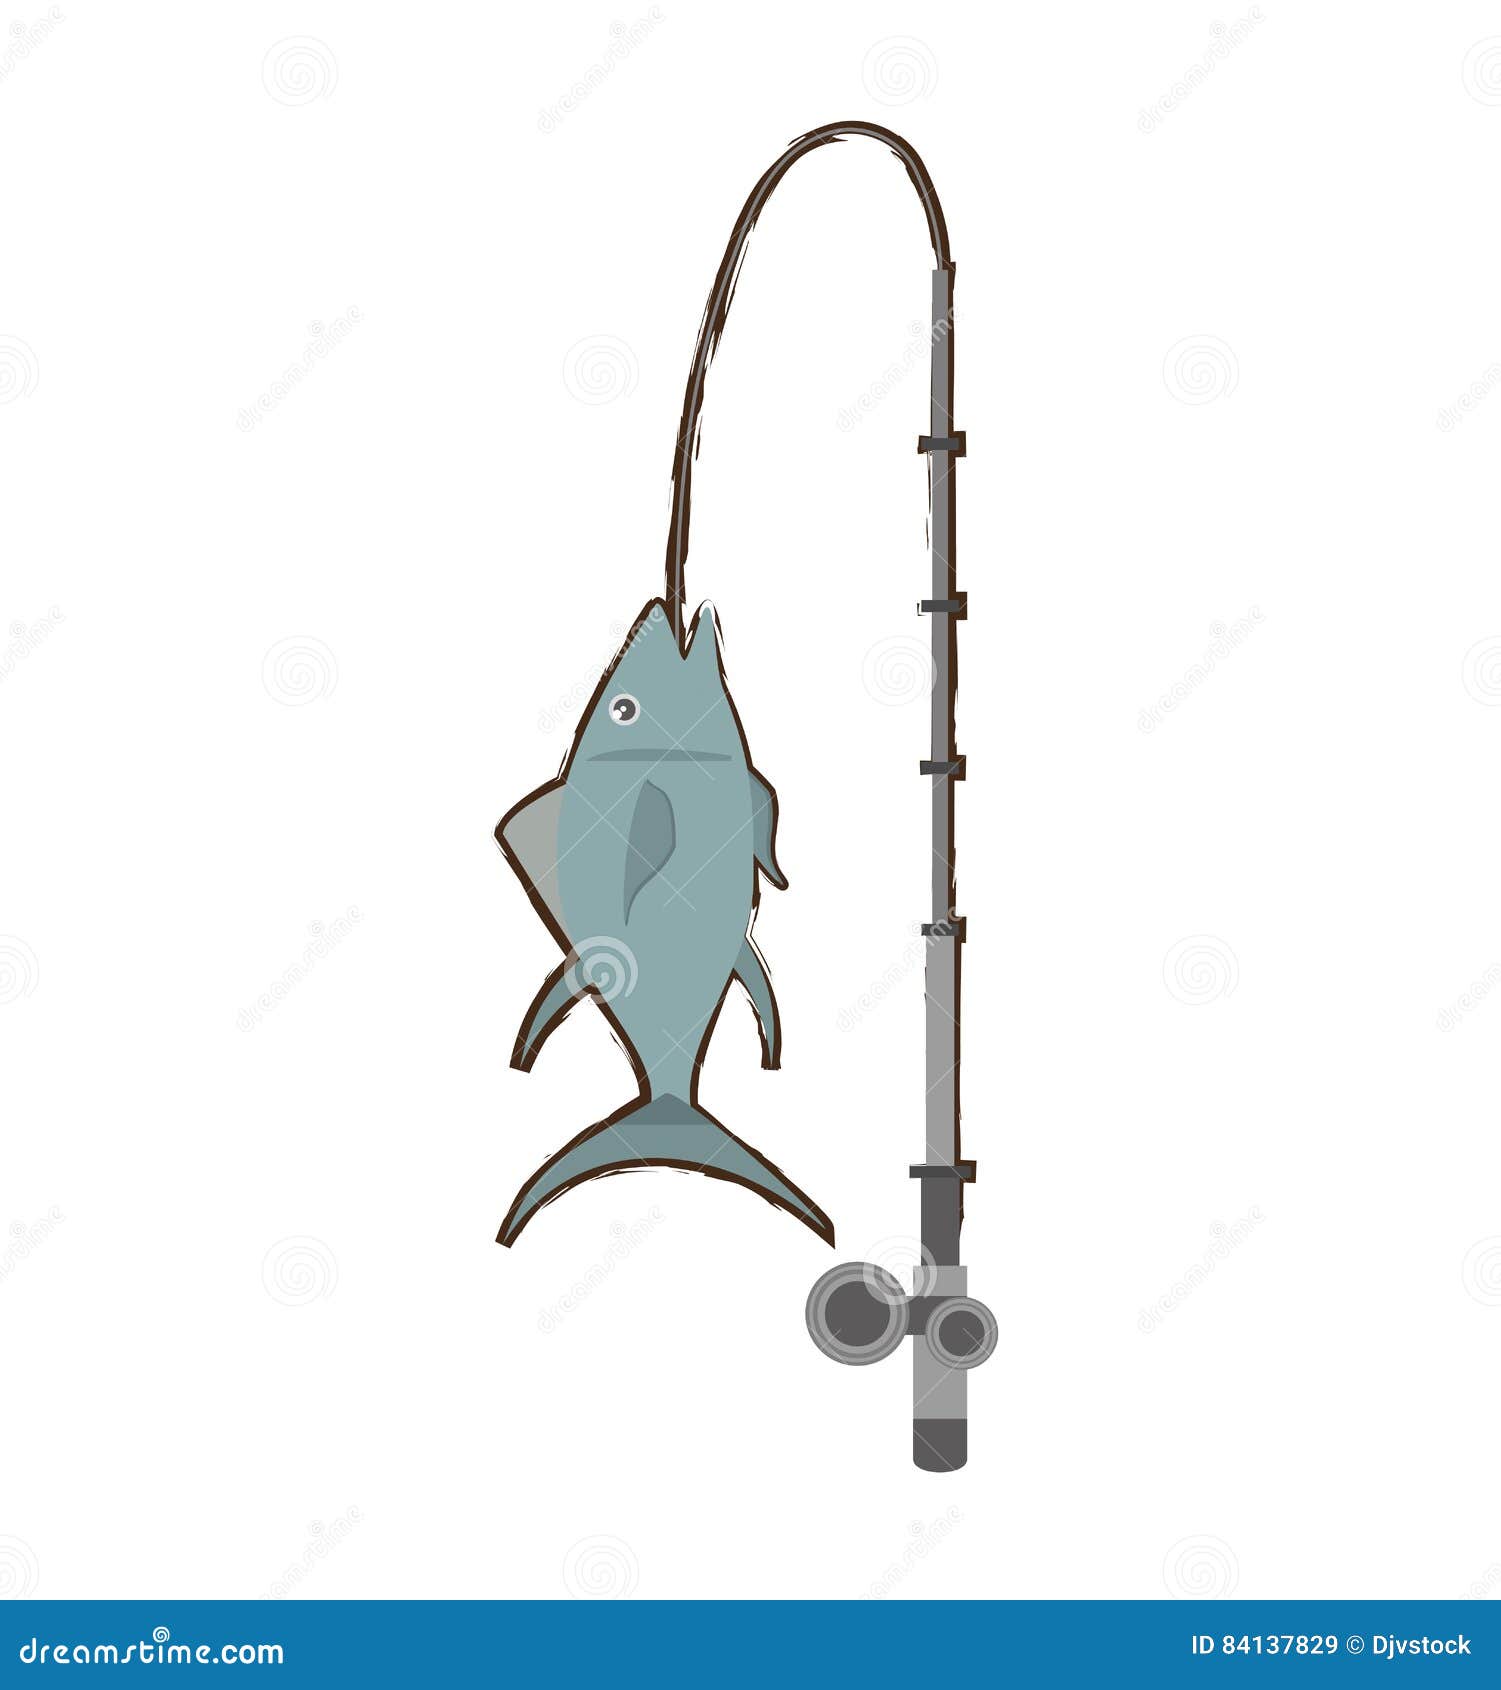 atun fish sealife food fishing rod